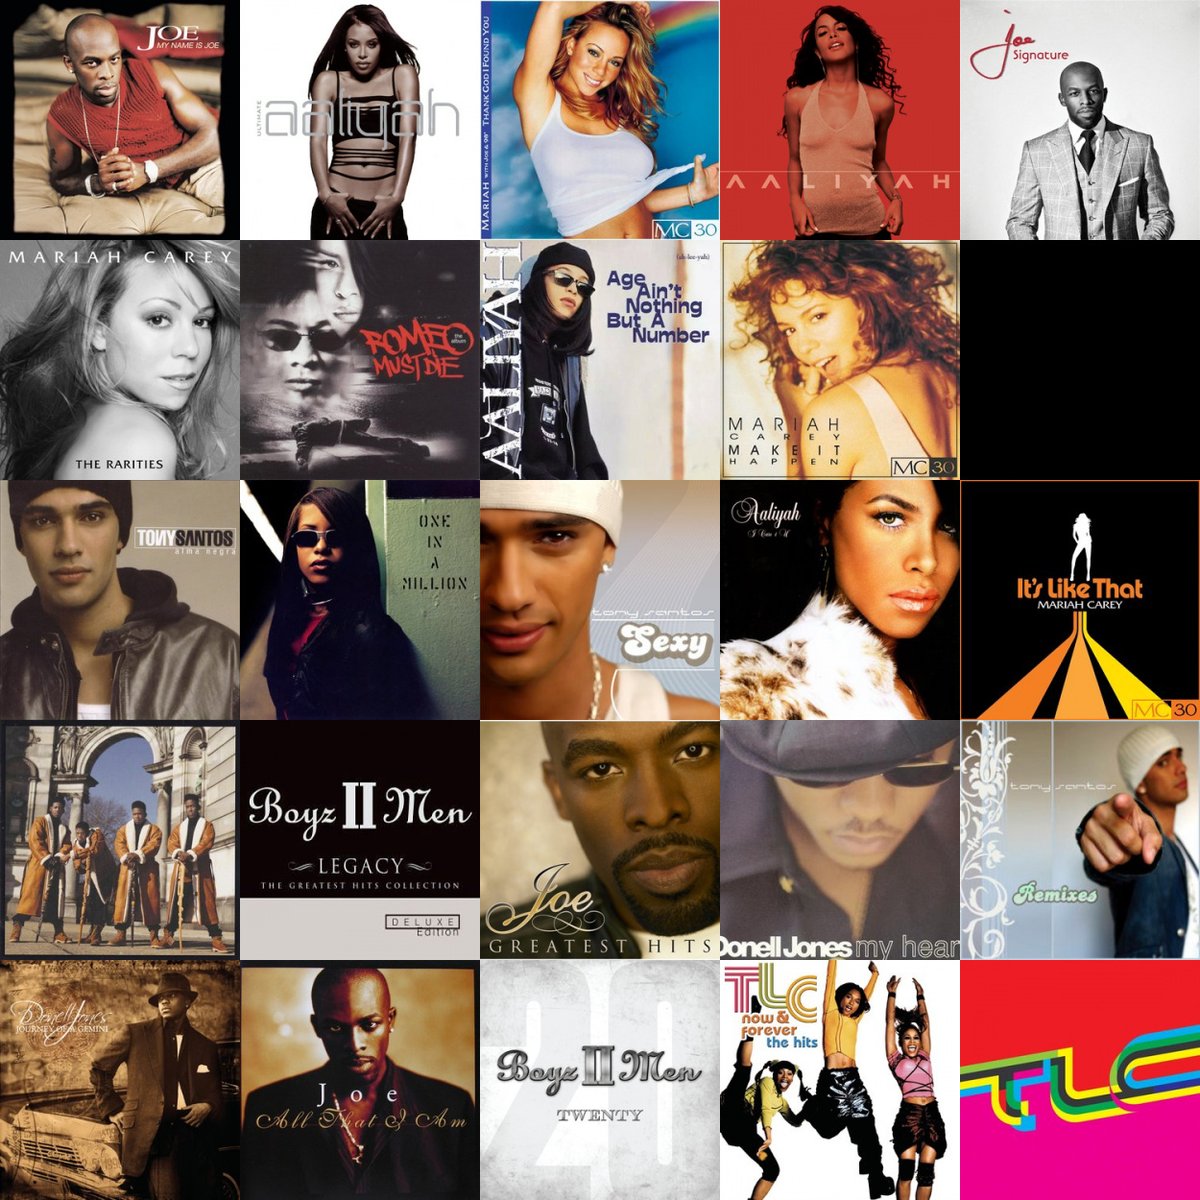 #lastfm #JanuaryTopster @lastfm #Joe #Aaliyah #MariahCarey #TonySantos #BoyzIIMen #DonellJones #TLC